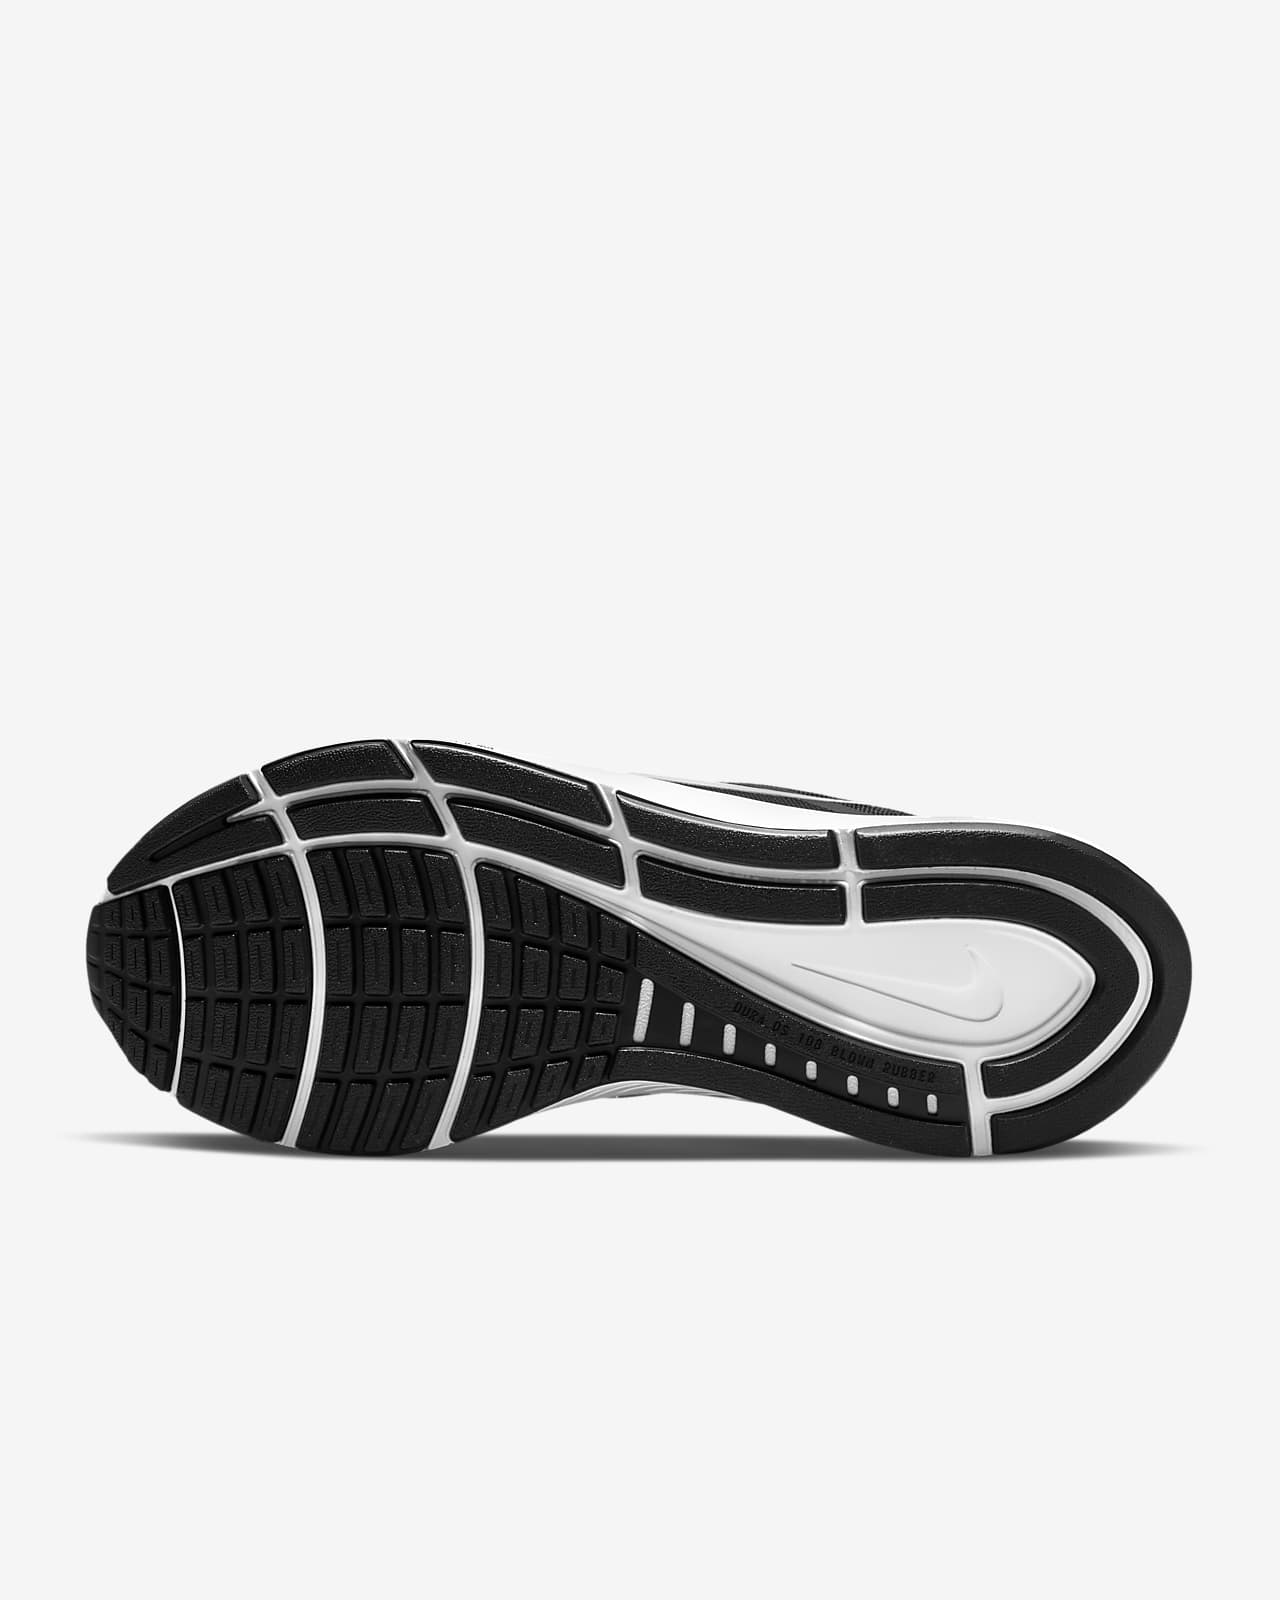 Chaussures de Running Nike Air Zoom Structure 24 Femme Noir Blanc